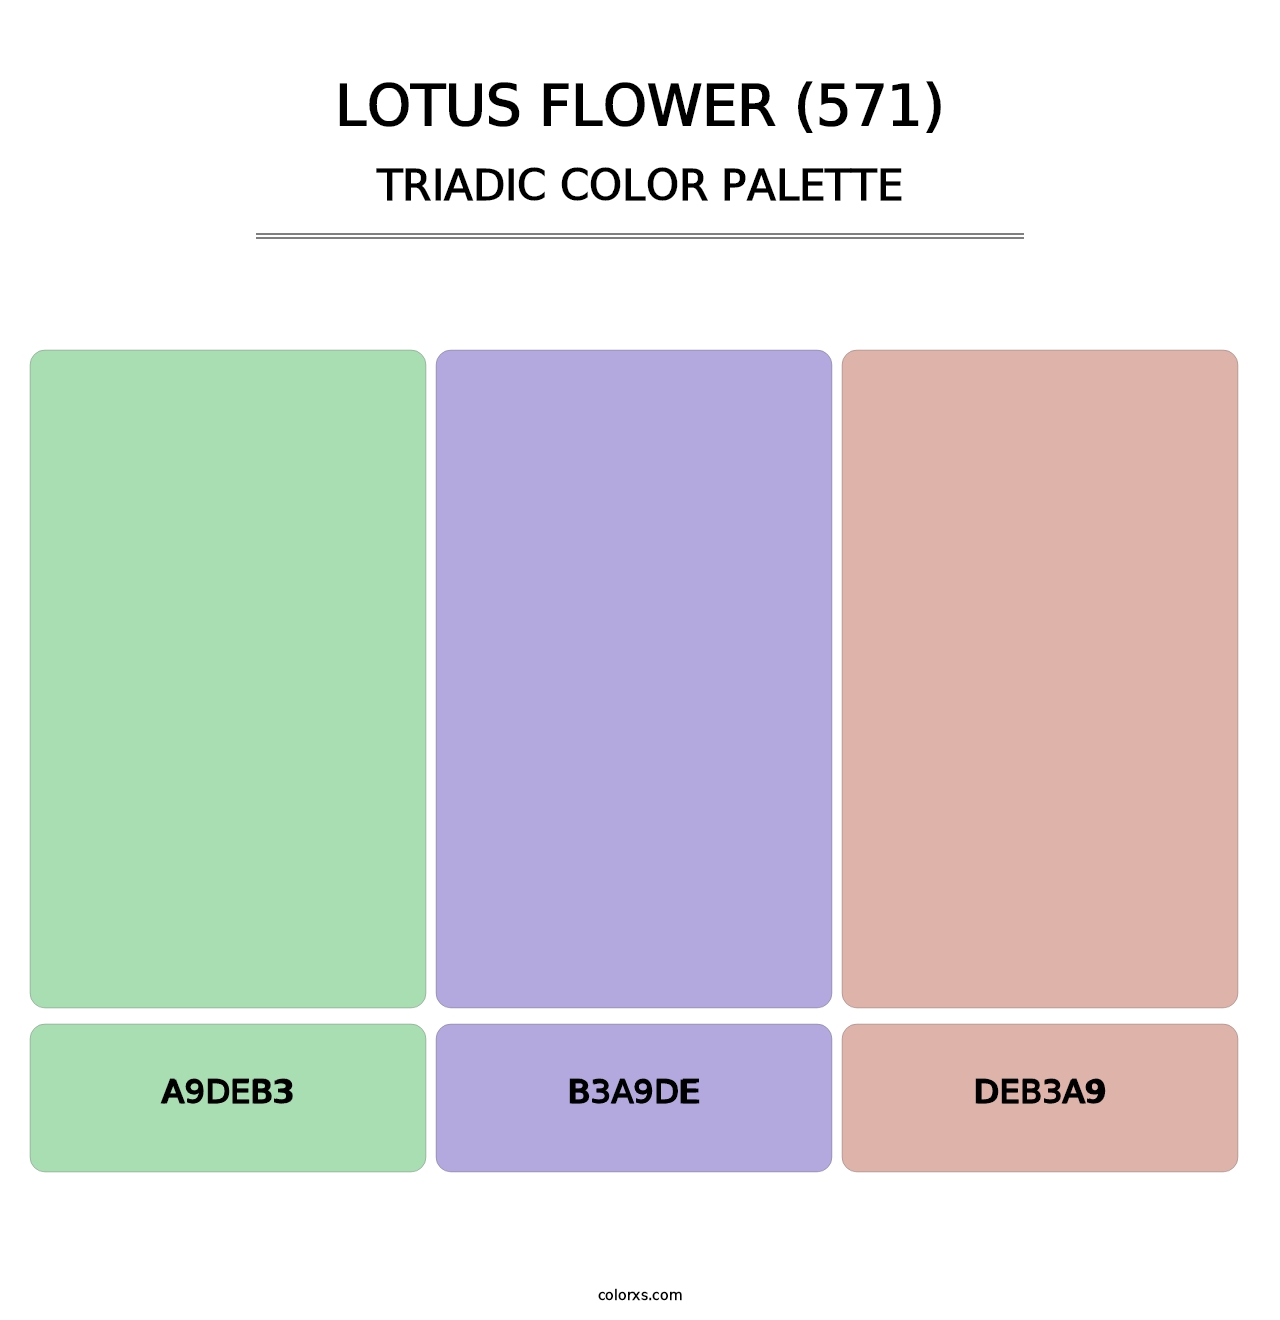 Lotus Flower (571) - Triadic Color Palette